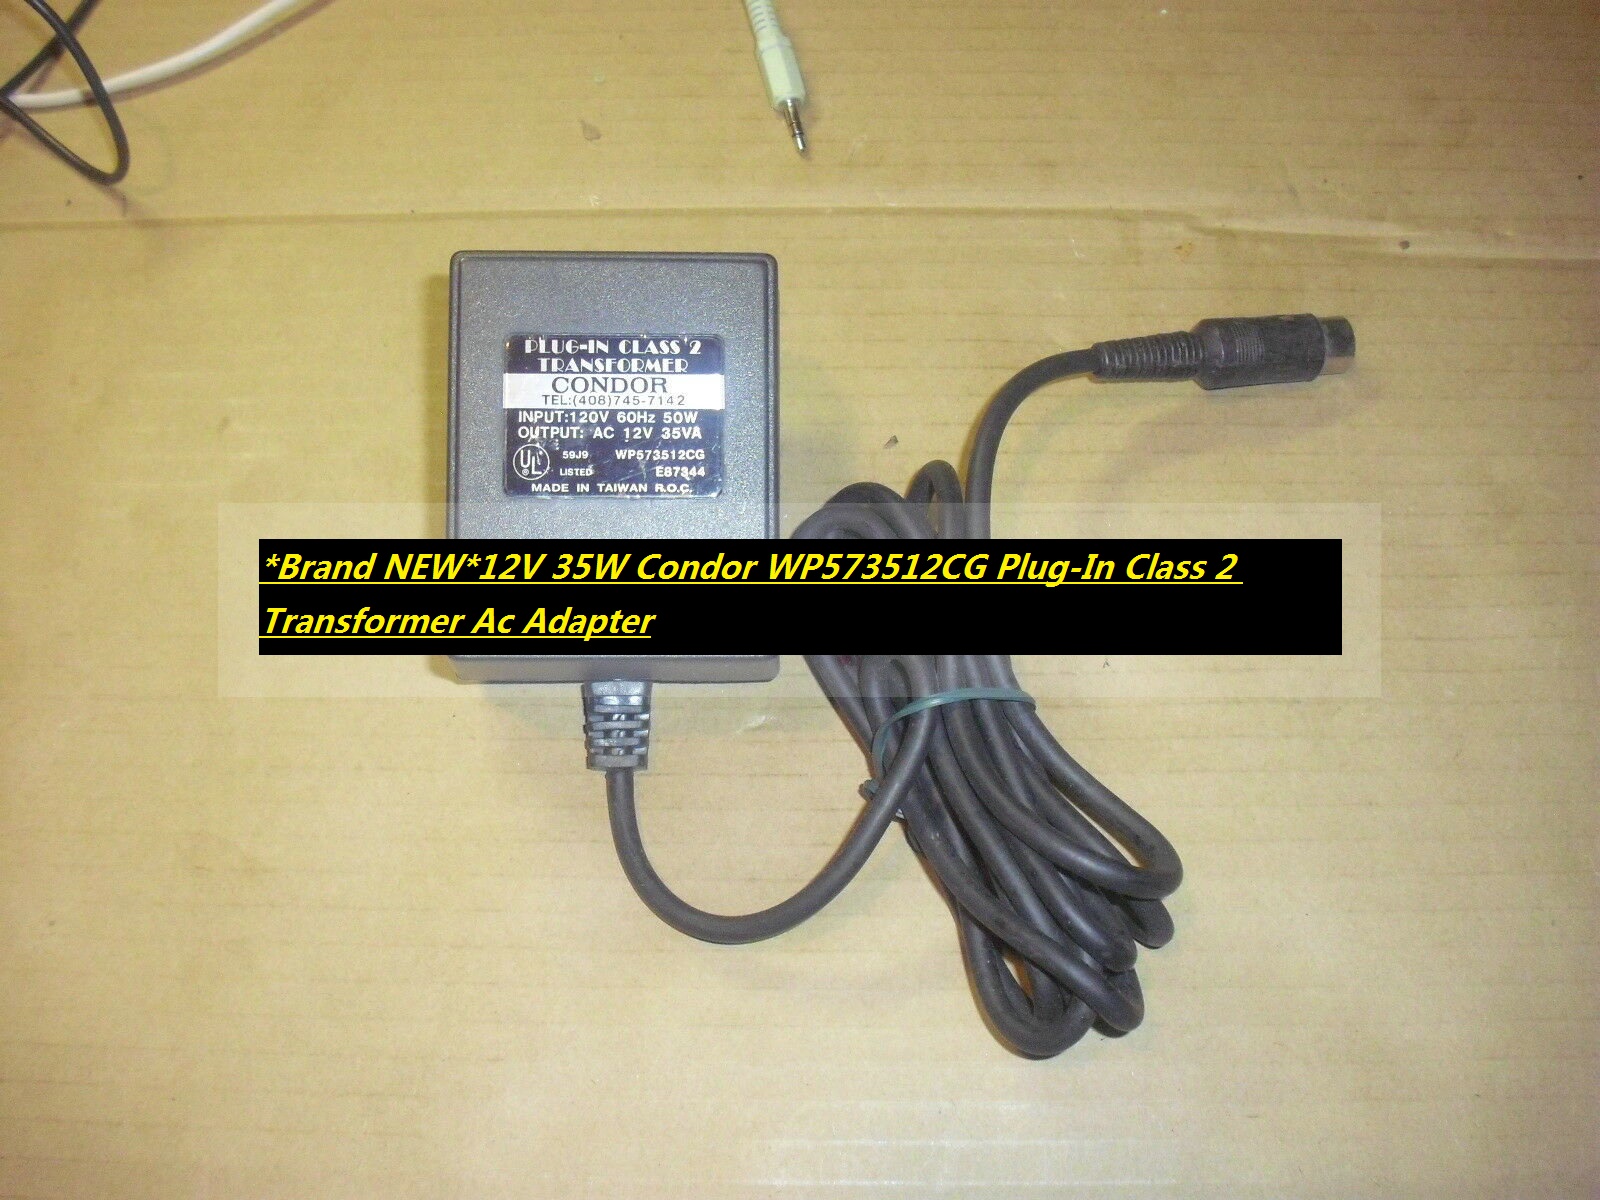 *Brand NEW*12V 35W Condor WP573512CG Plug-In Class 2 Transformer Ac Adapter